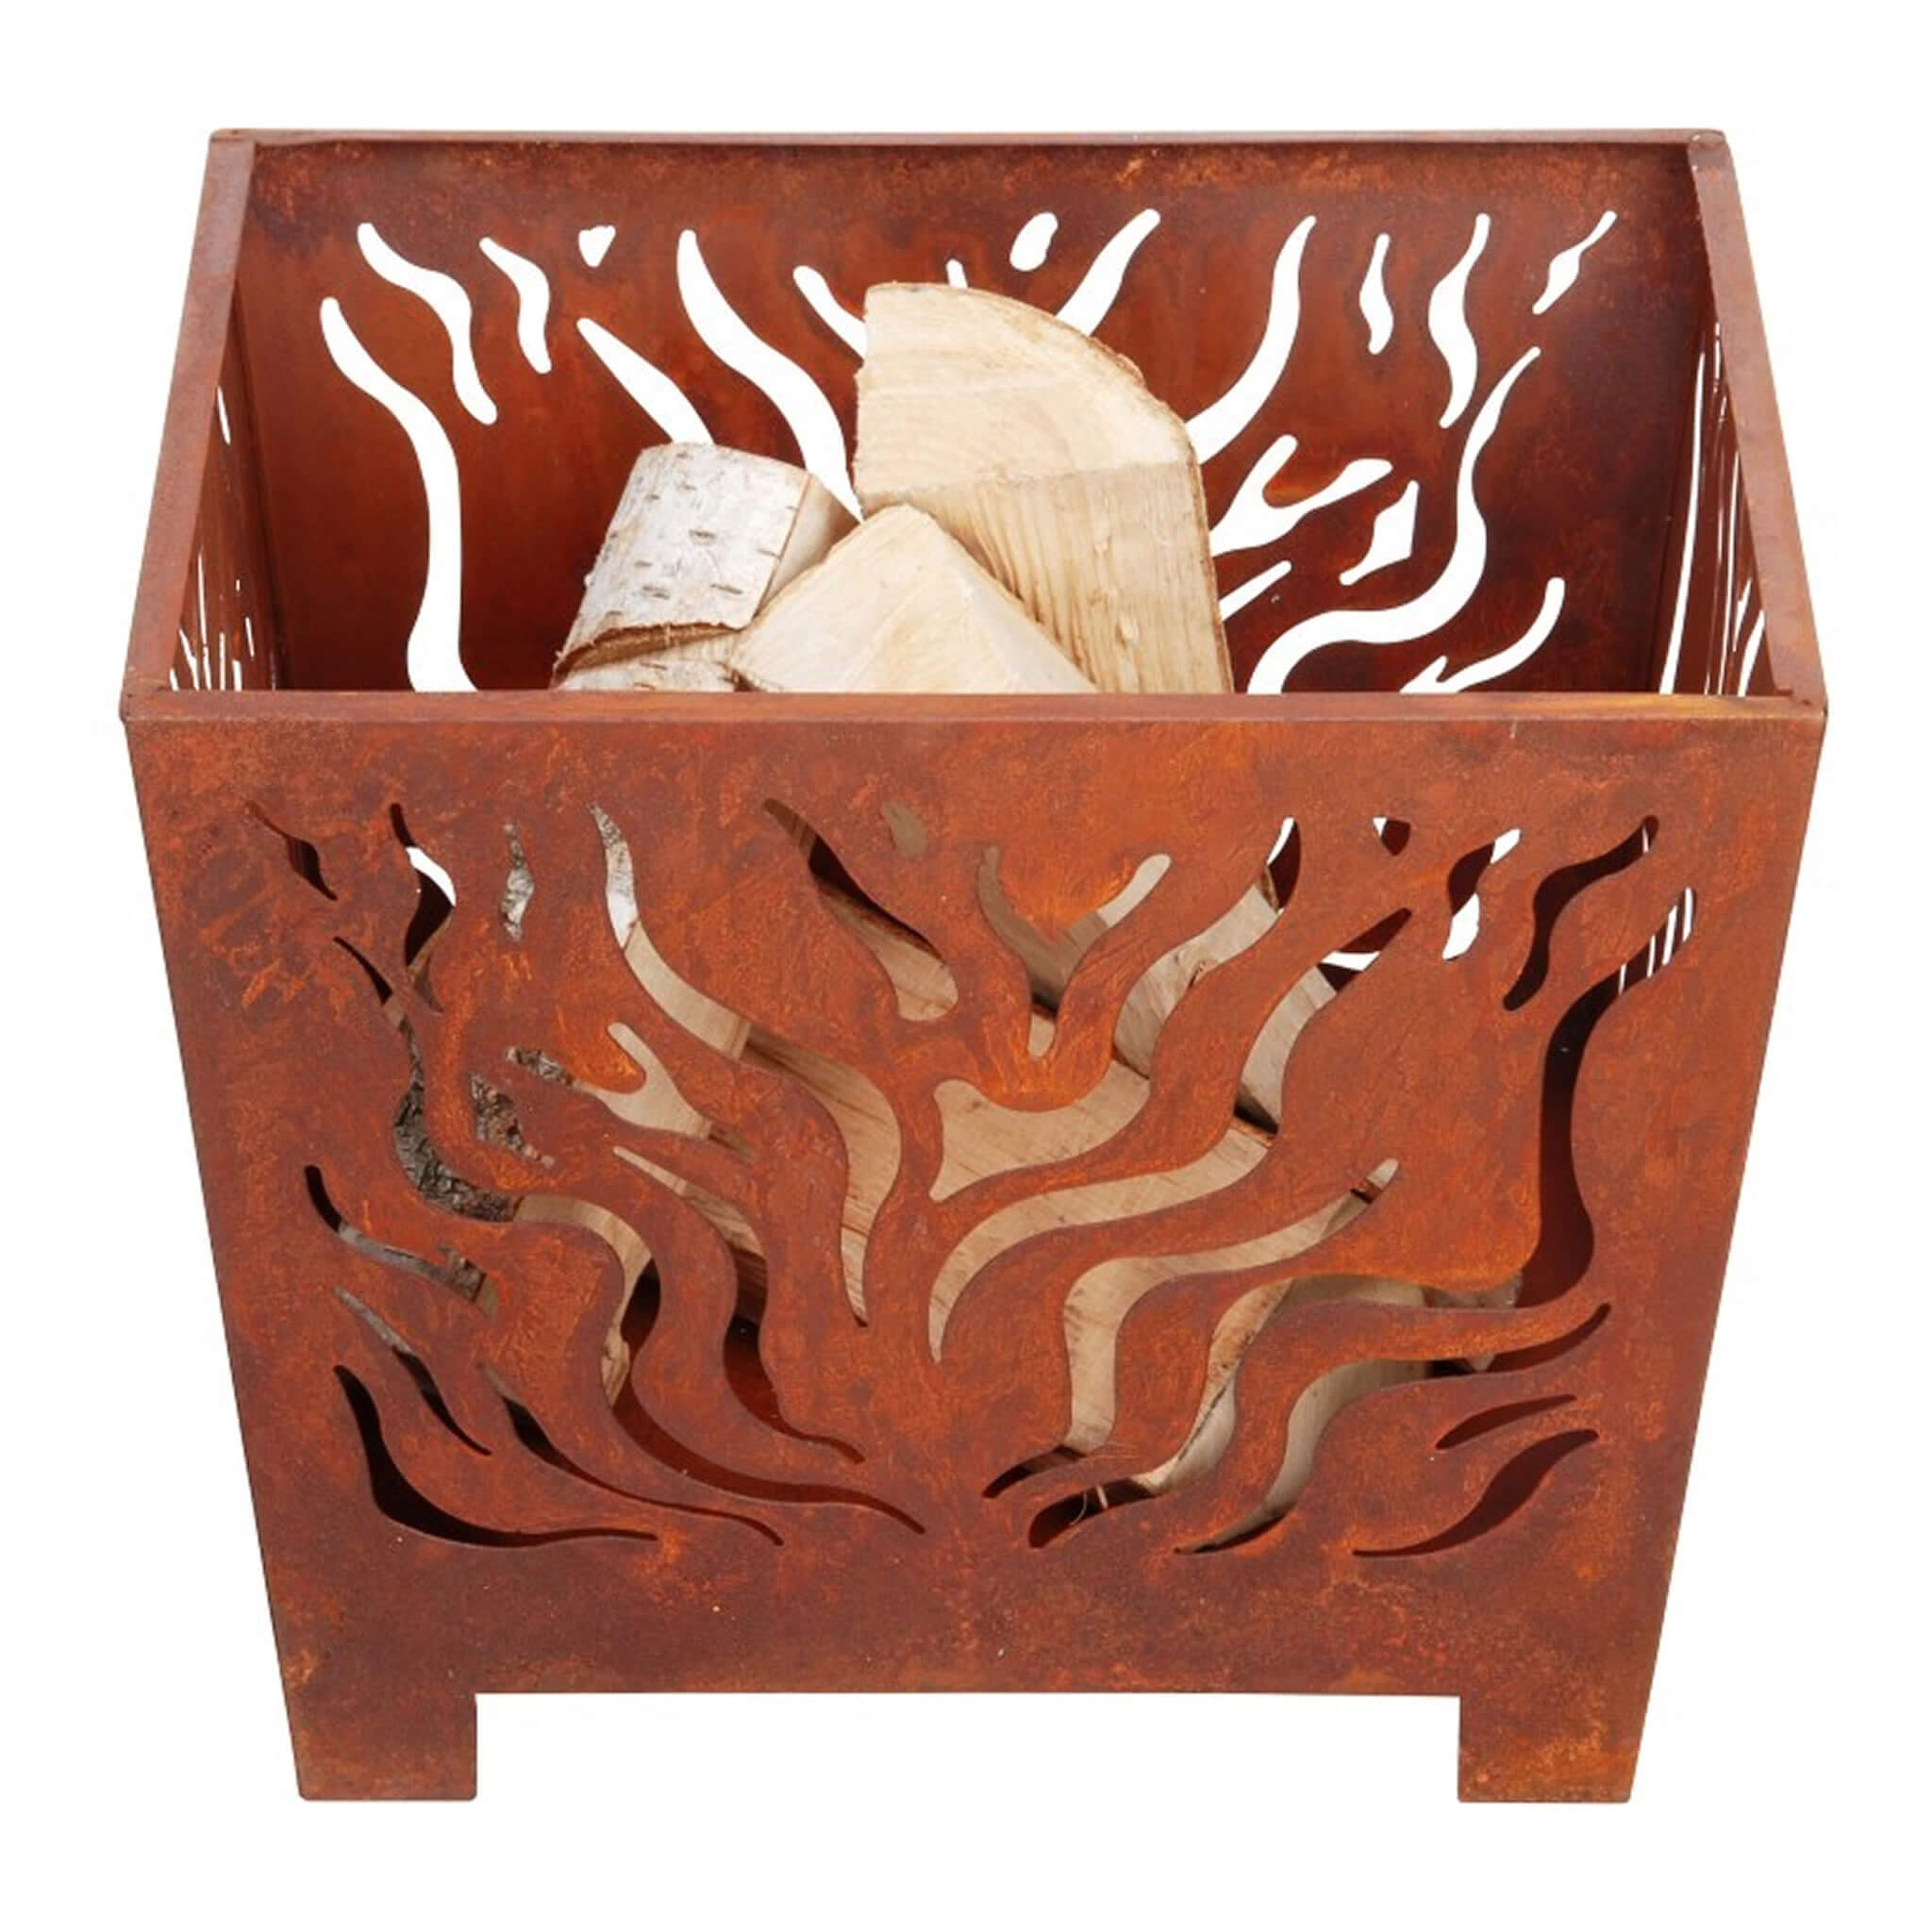 Flames Rustic Fire Basket - Alfresco Dining Company